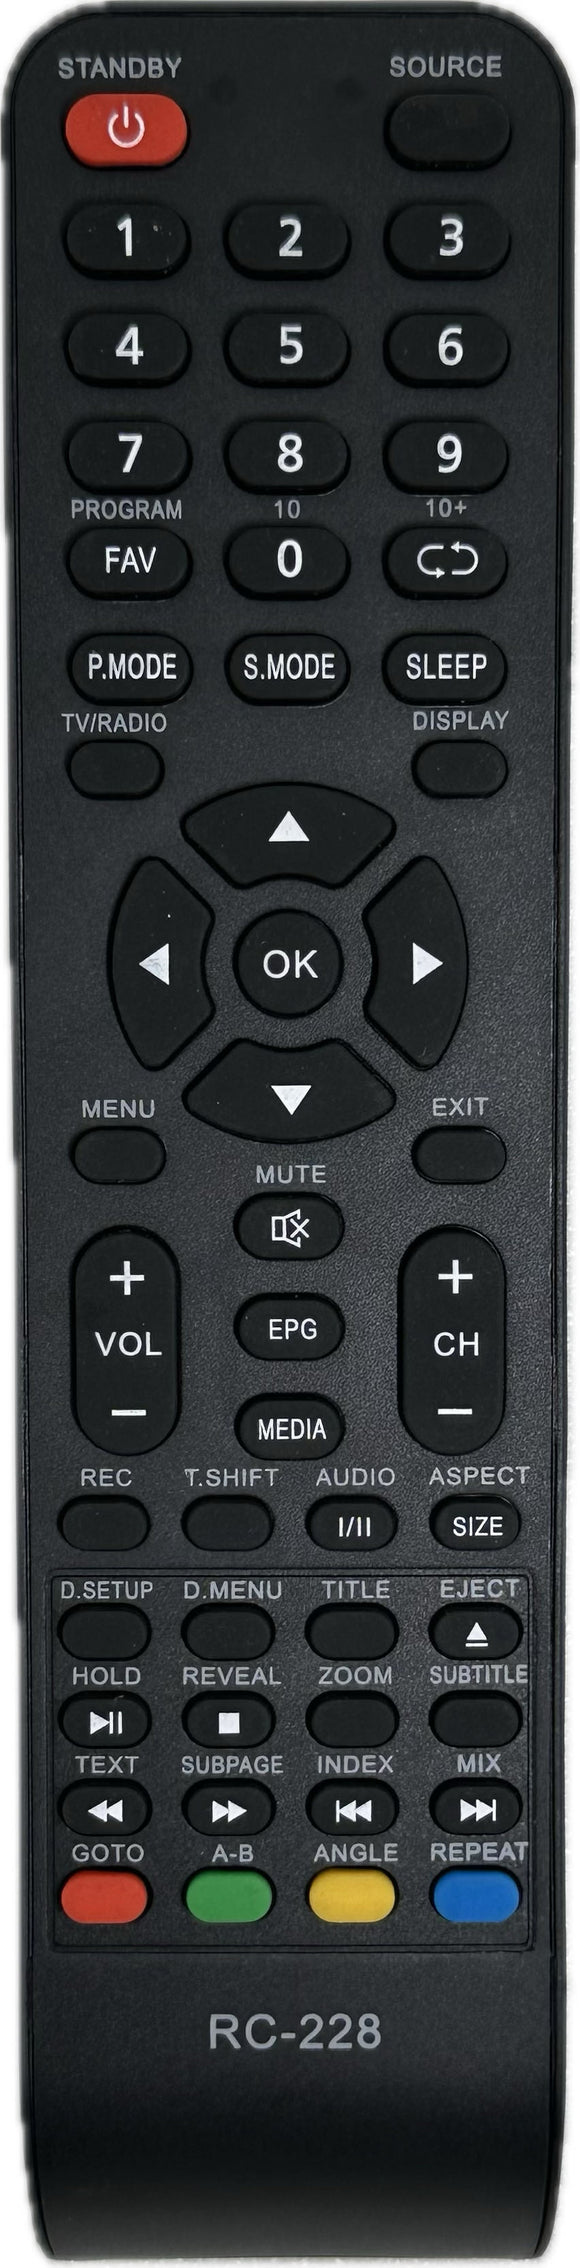 Blaupunkt BP3200HDV7100 TV Replacement Remote Control